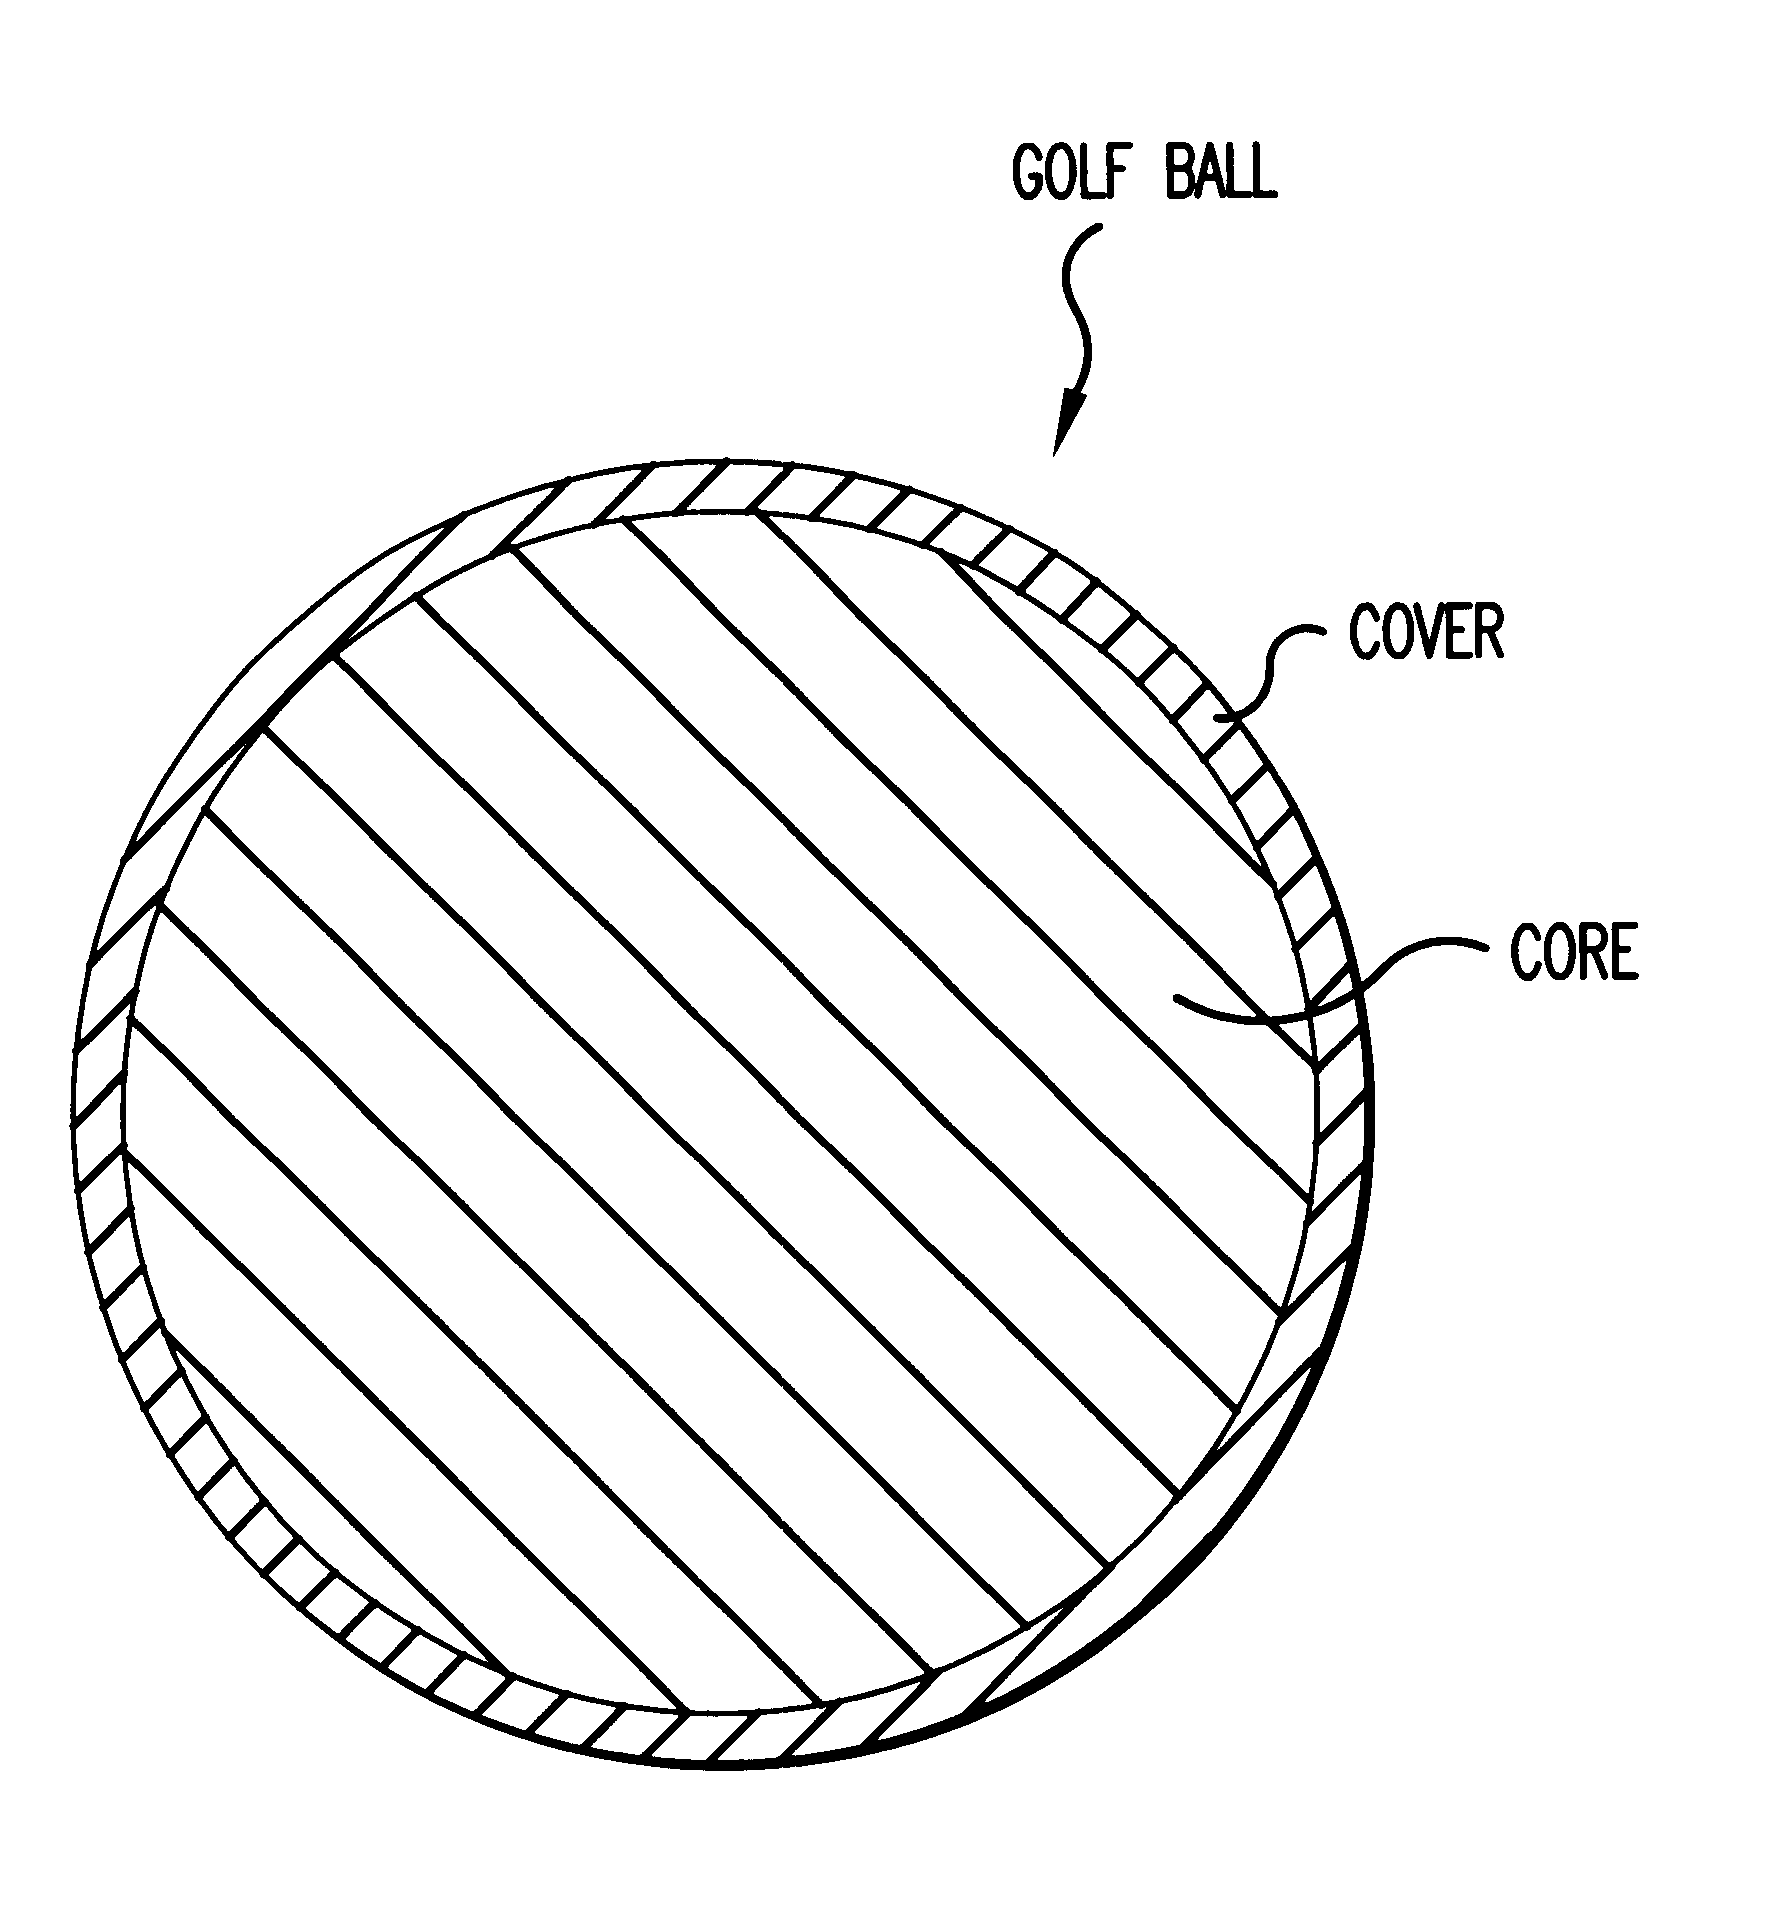 Solid golf ball